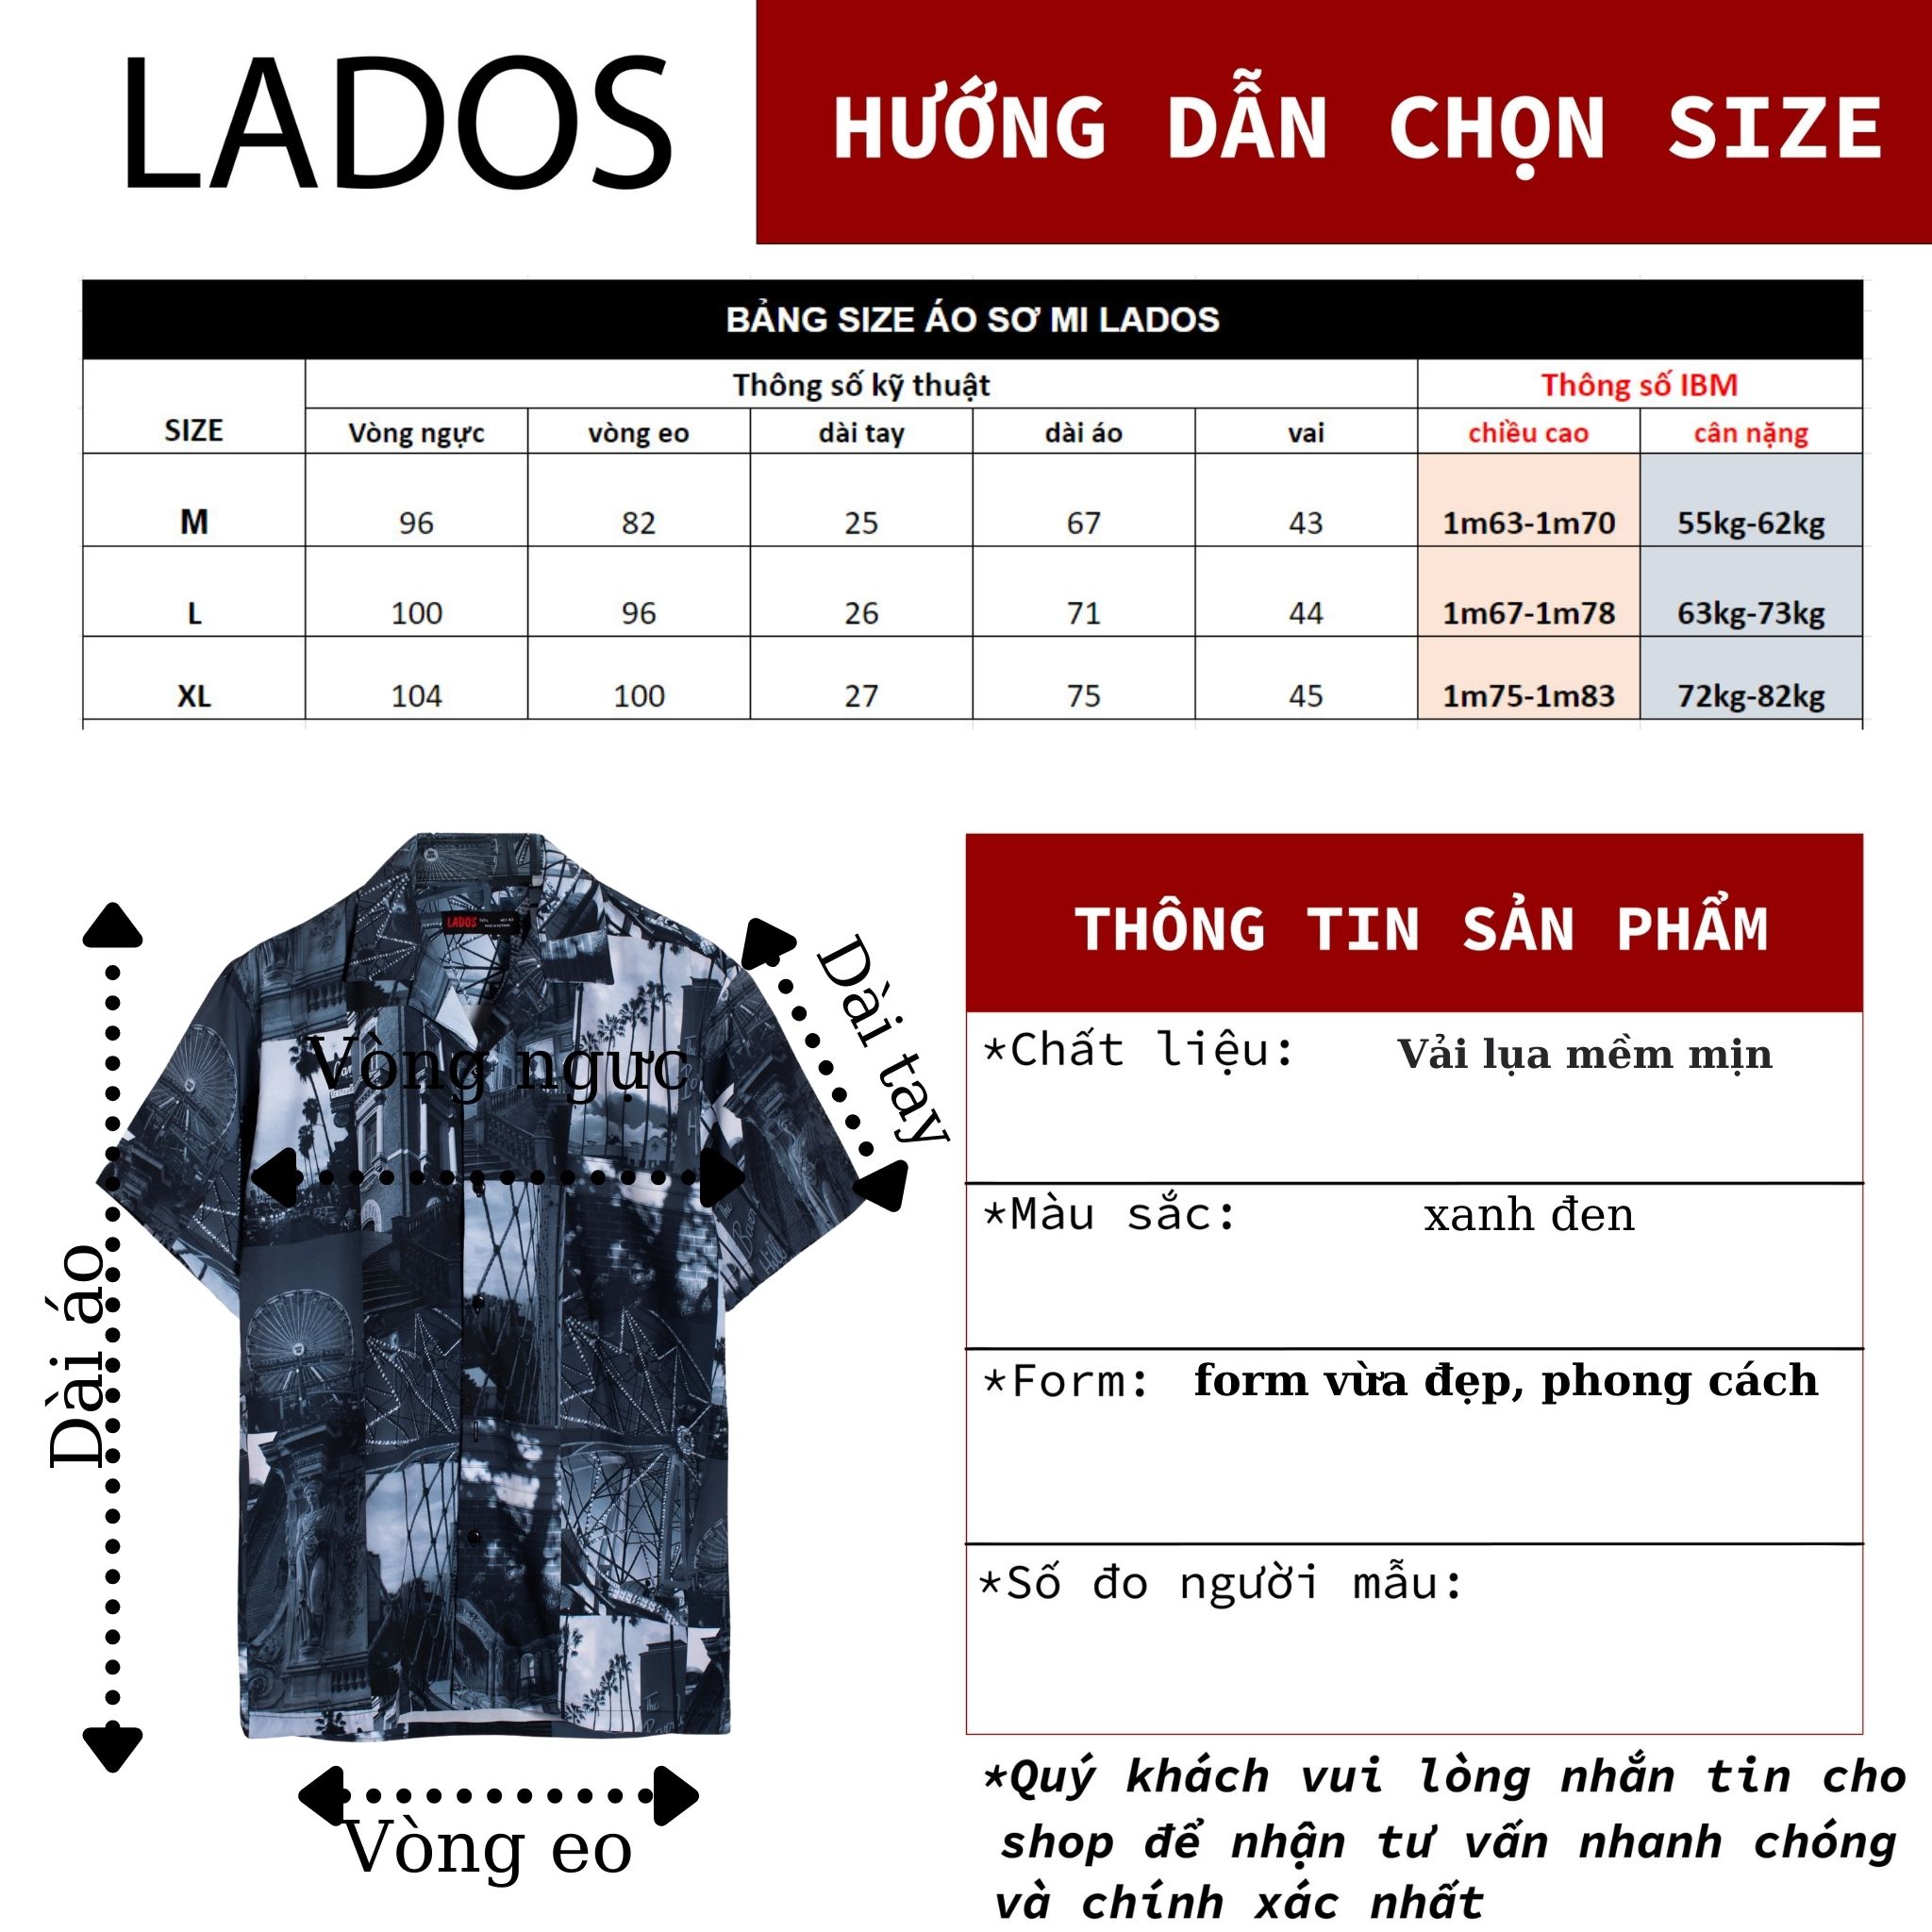 Cuban shirt họa tiết LADOS - 8081